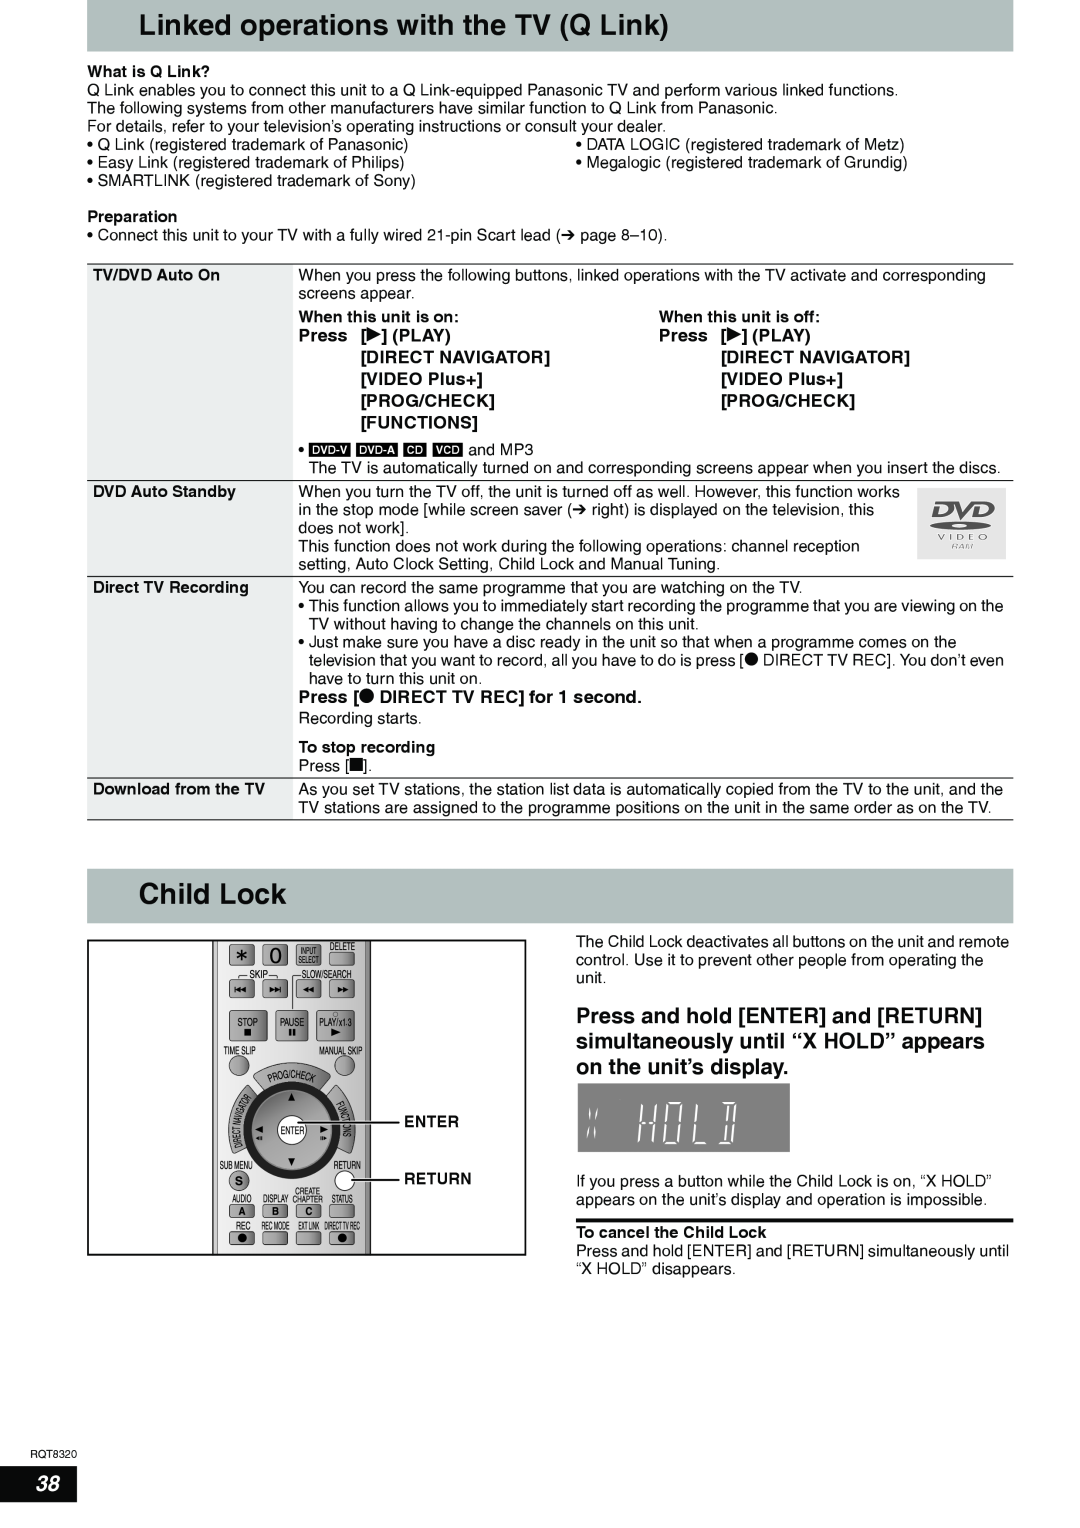 Panasonic DMR-ES15EB manual Linked operations with the TV Q Link, Child Lock, Megalogic registered trademark of Grundig 